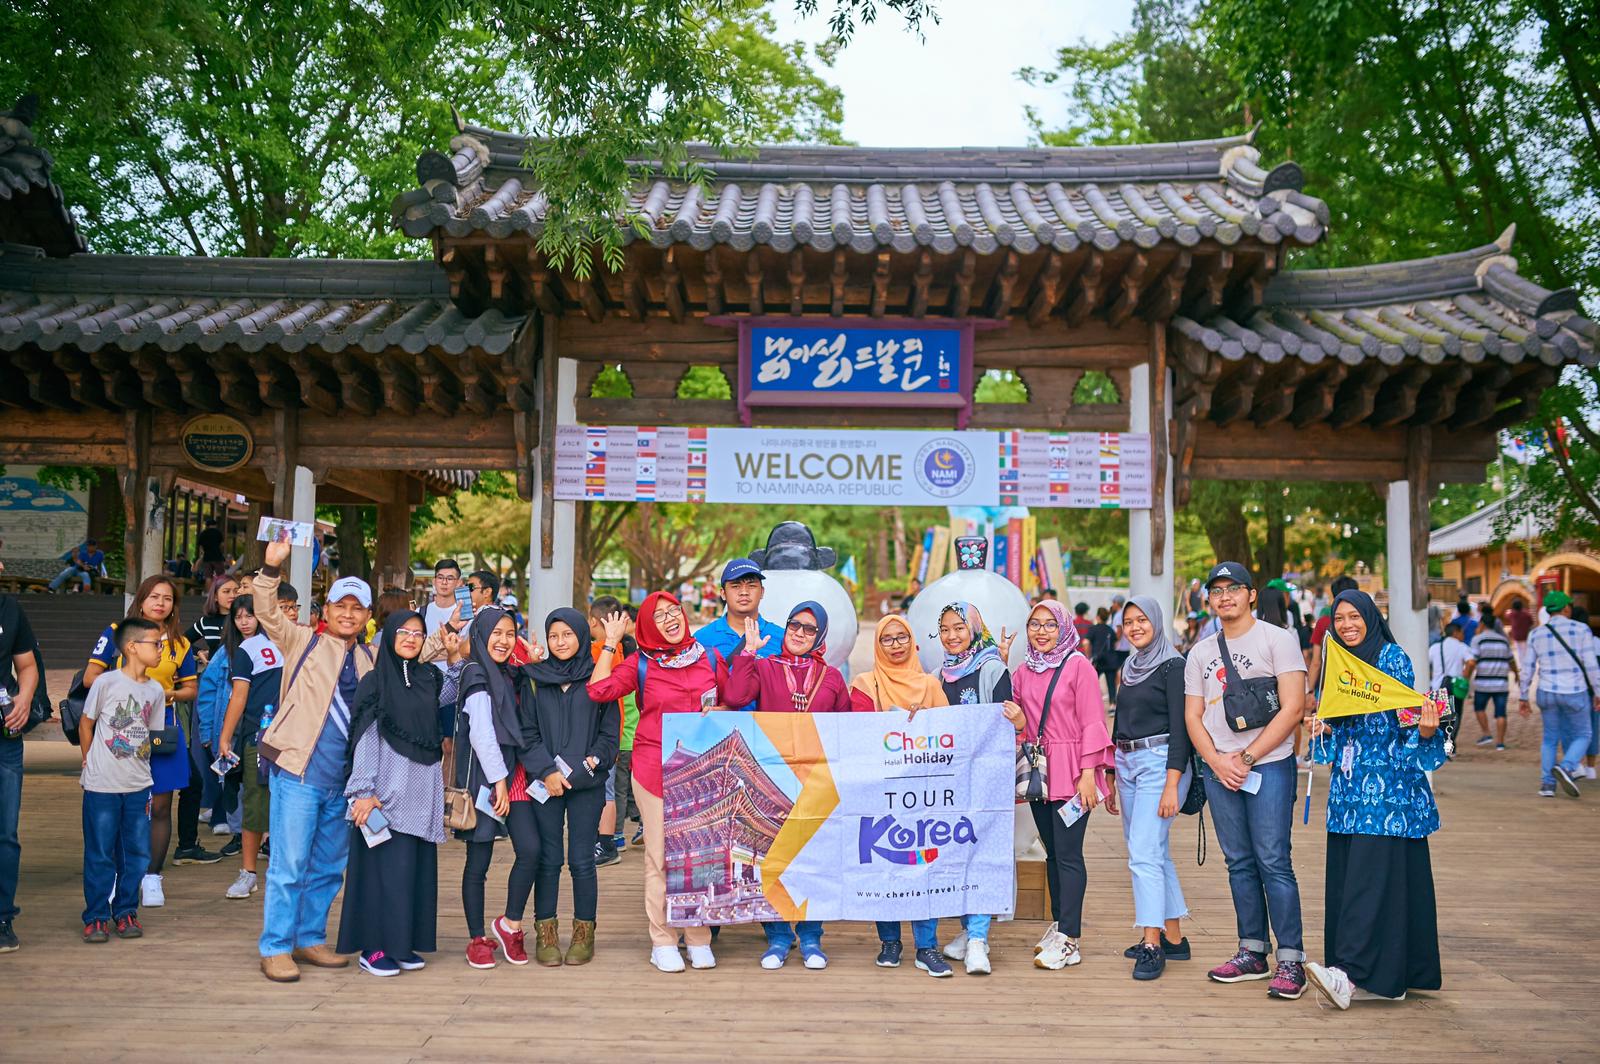 Paket Tour Korea Jeju Muslim 2020 2021 Pelopor Wisata